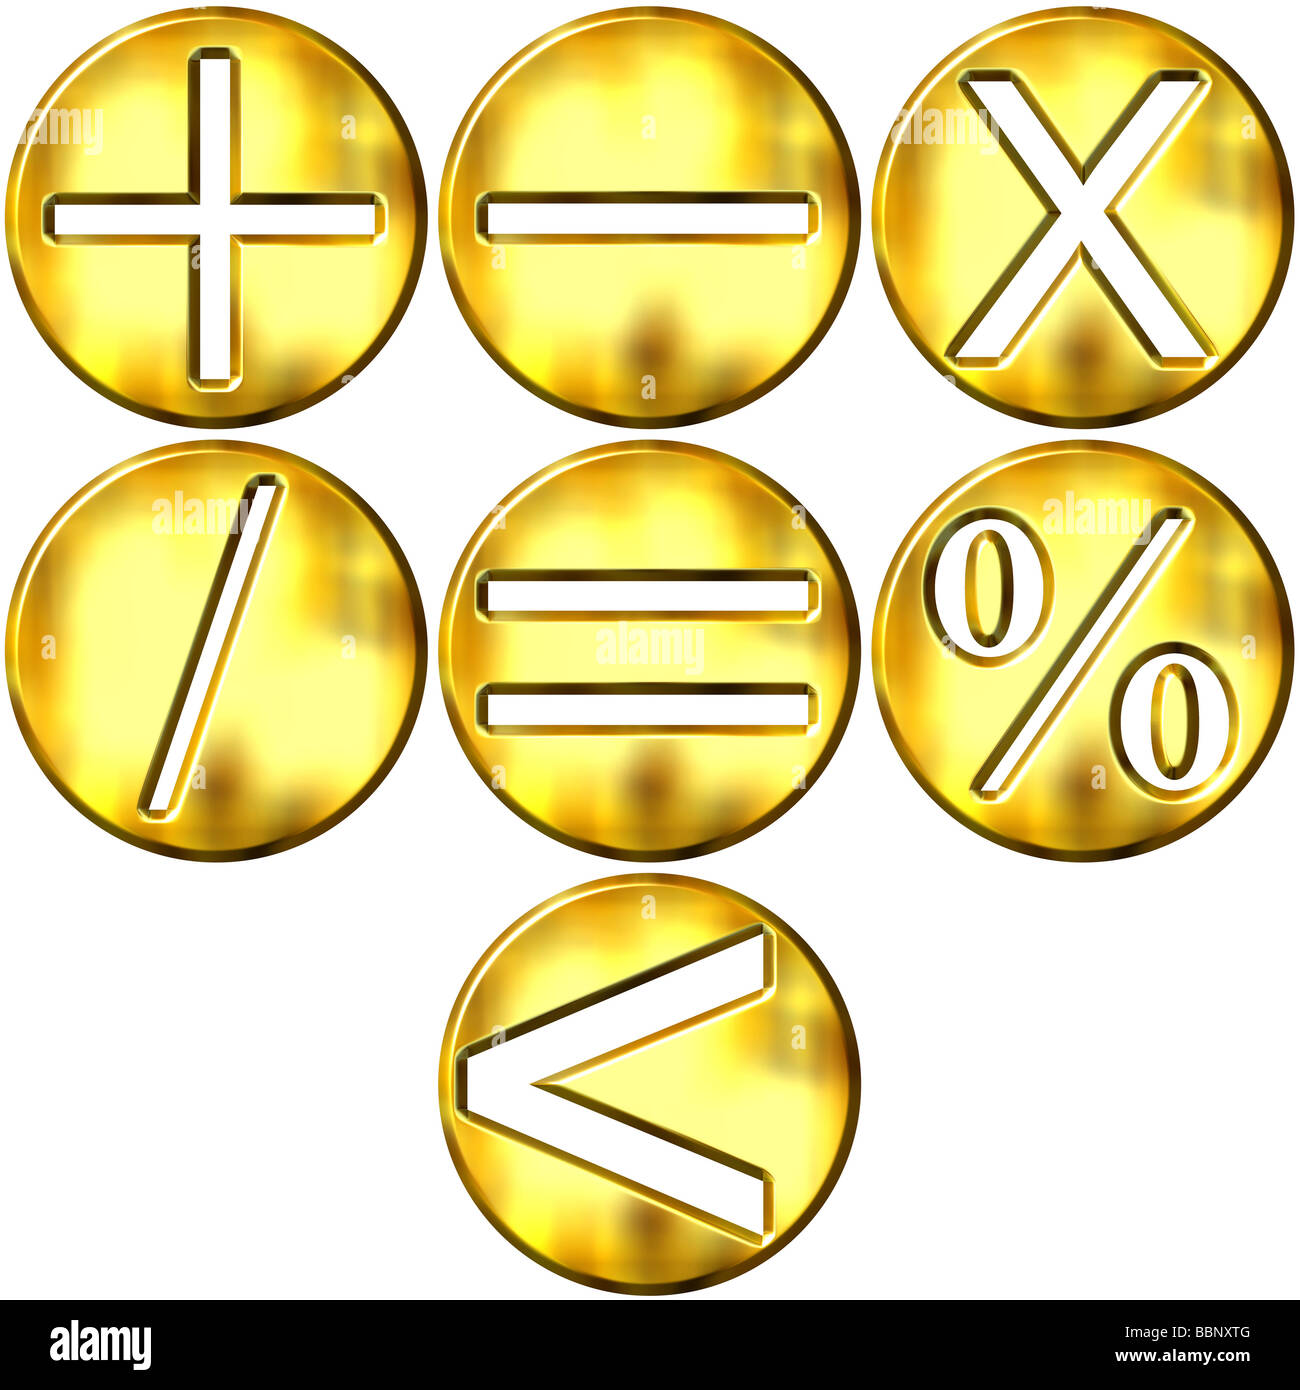 3d golden math symbols Stock Photo